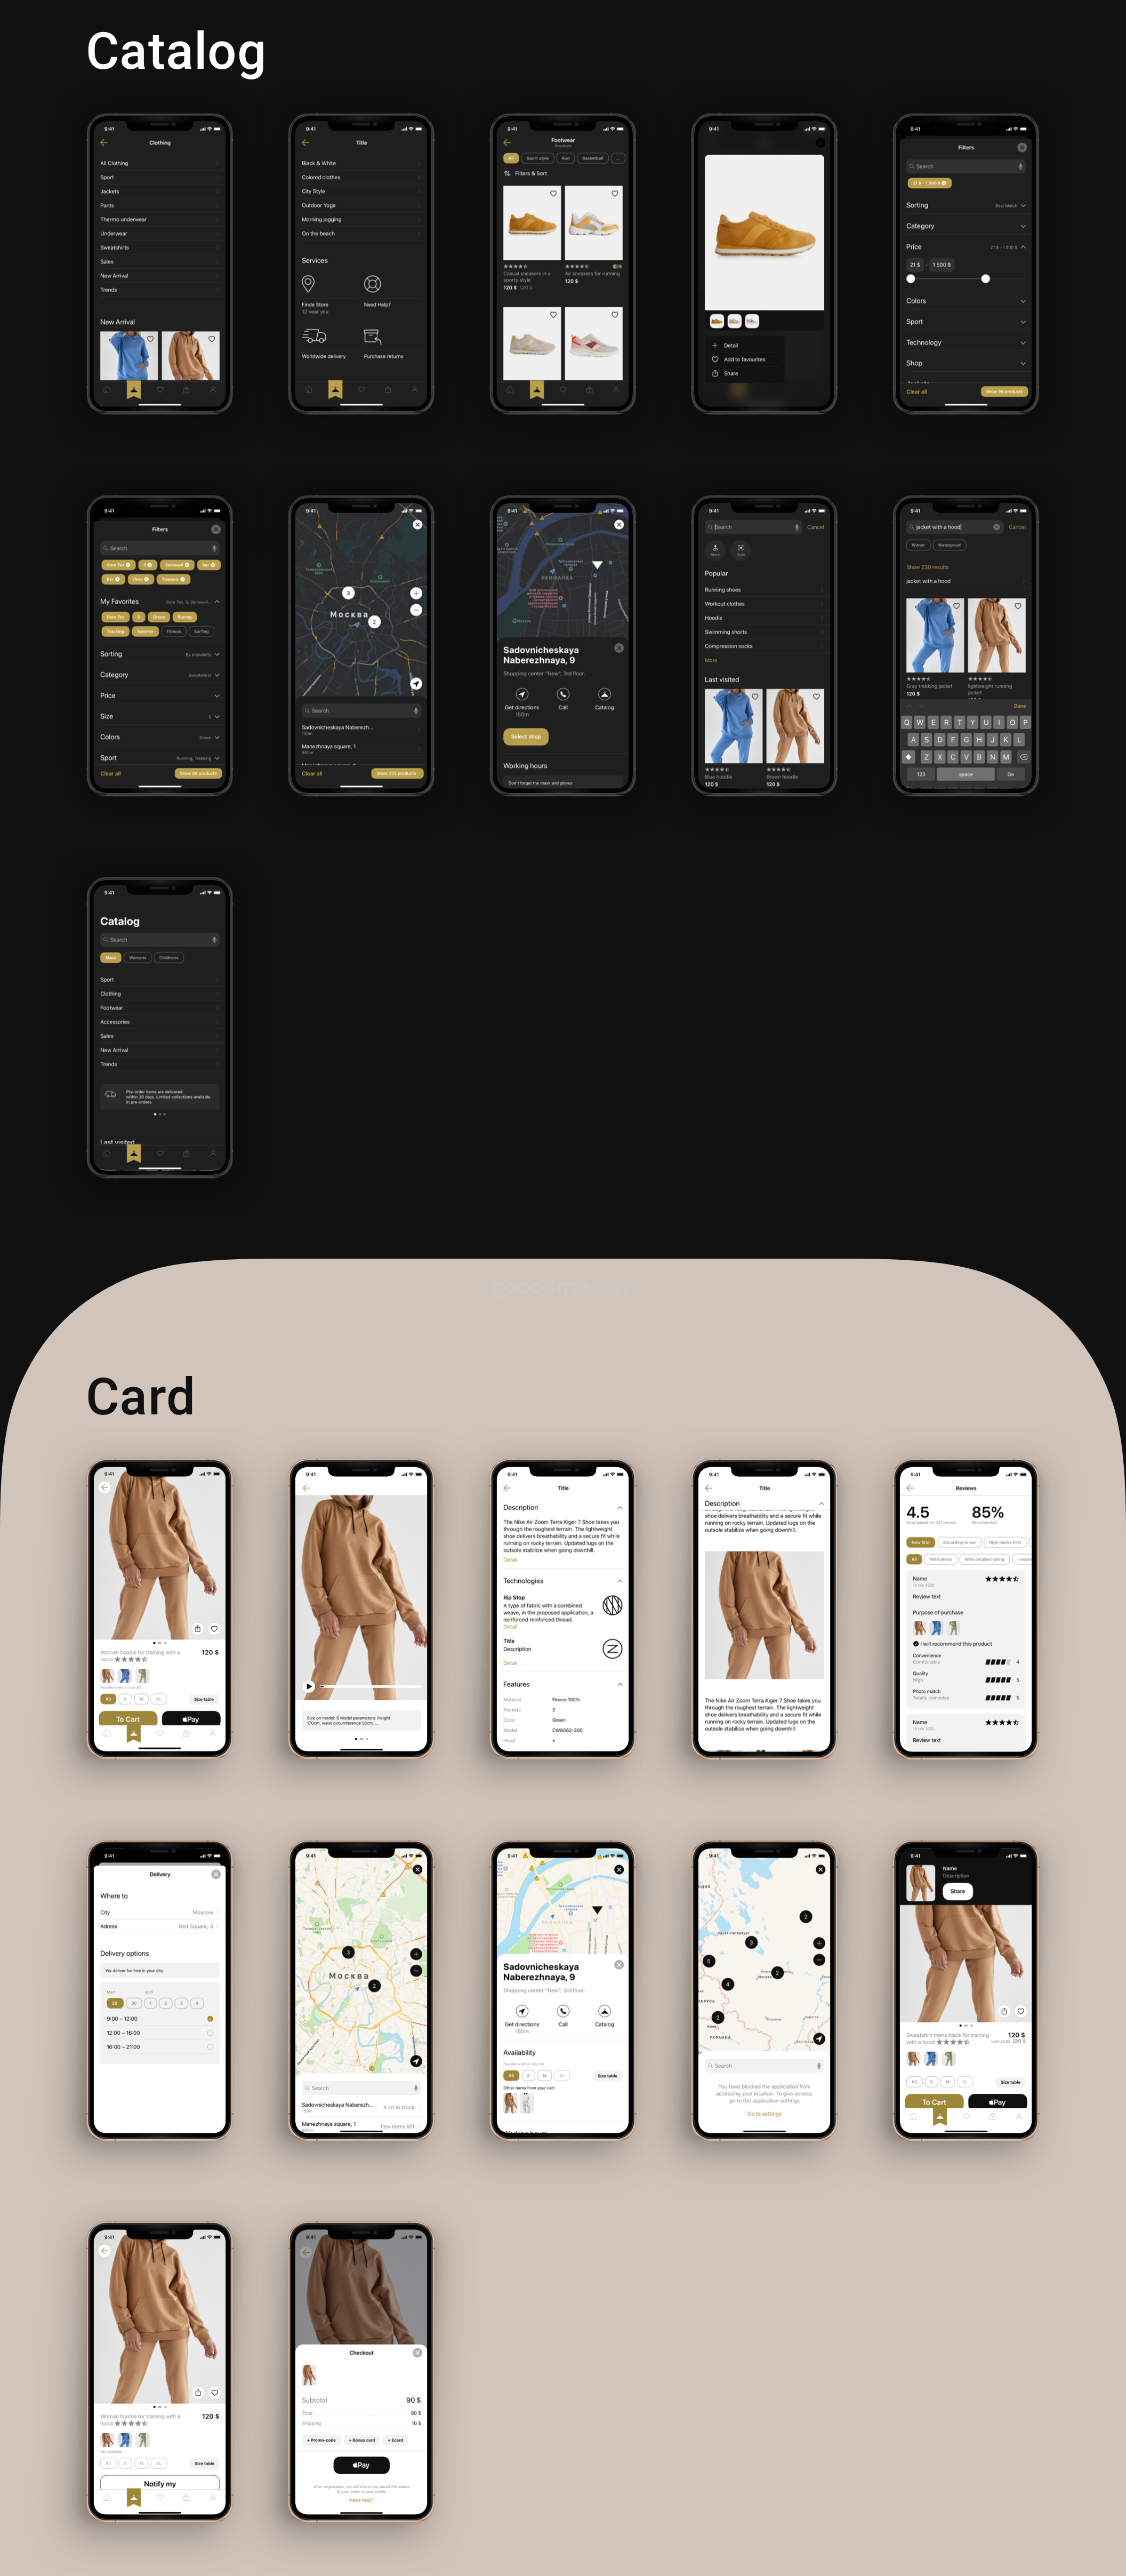 运动服饰商店应用 APP 界面设计 UI 模板套件iOS E-commerce Product UI Kit — Sport Wear Shop